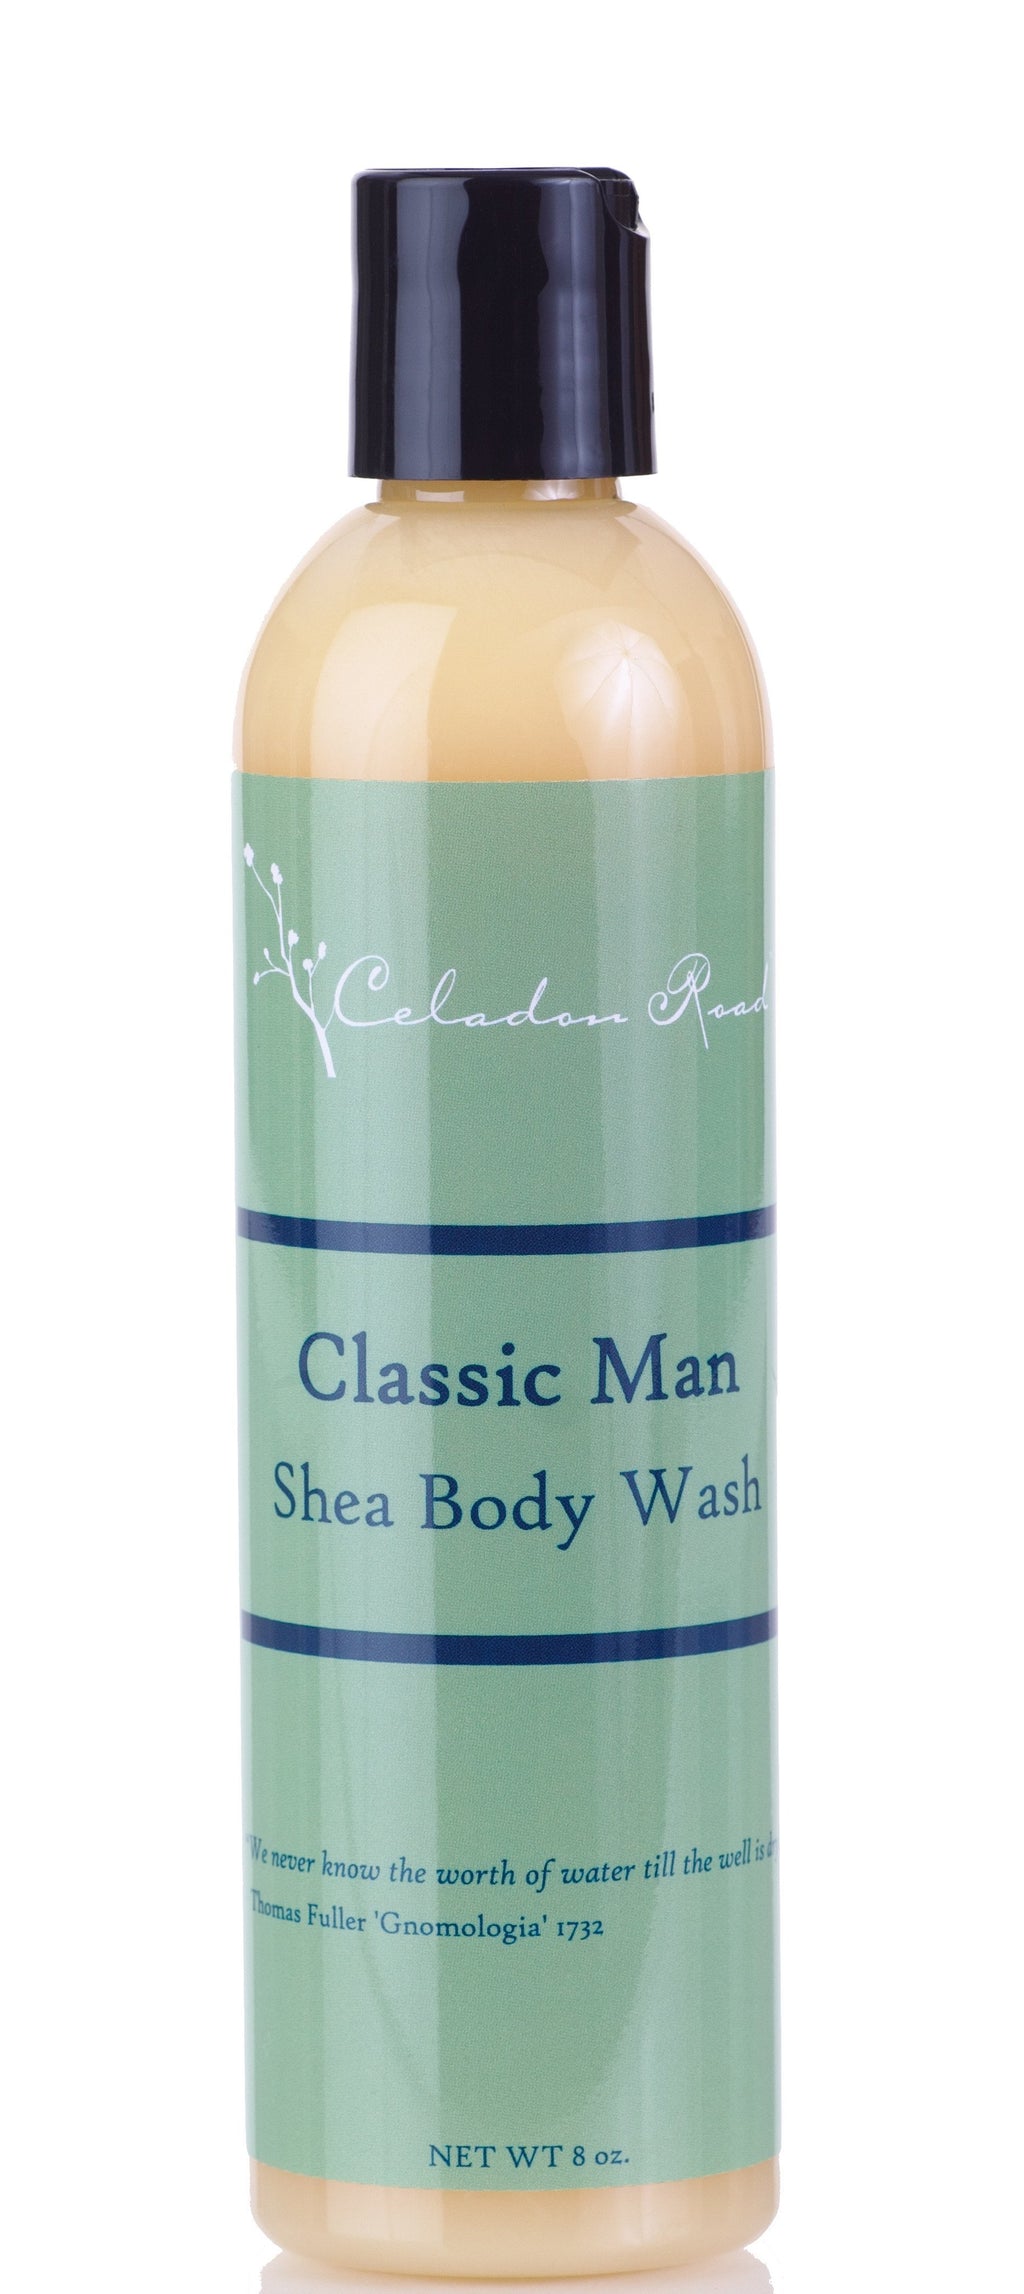 Classic Man Shea Body Wash- Celadon Road- www.celadonroad.com